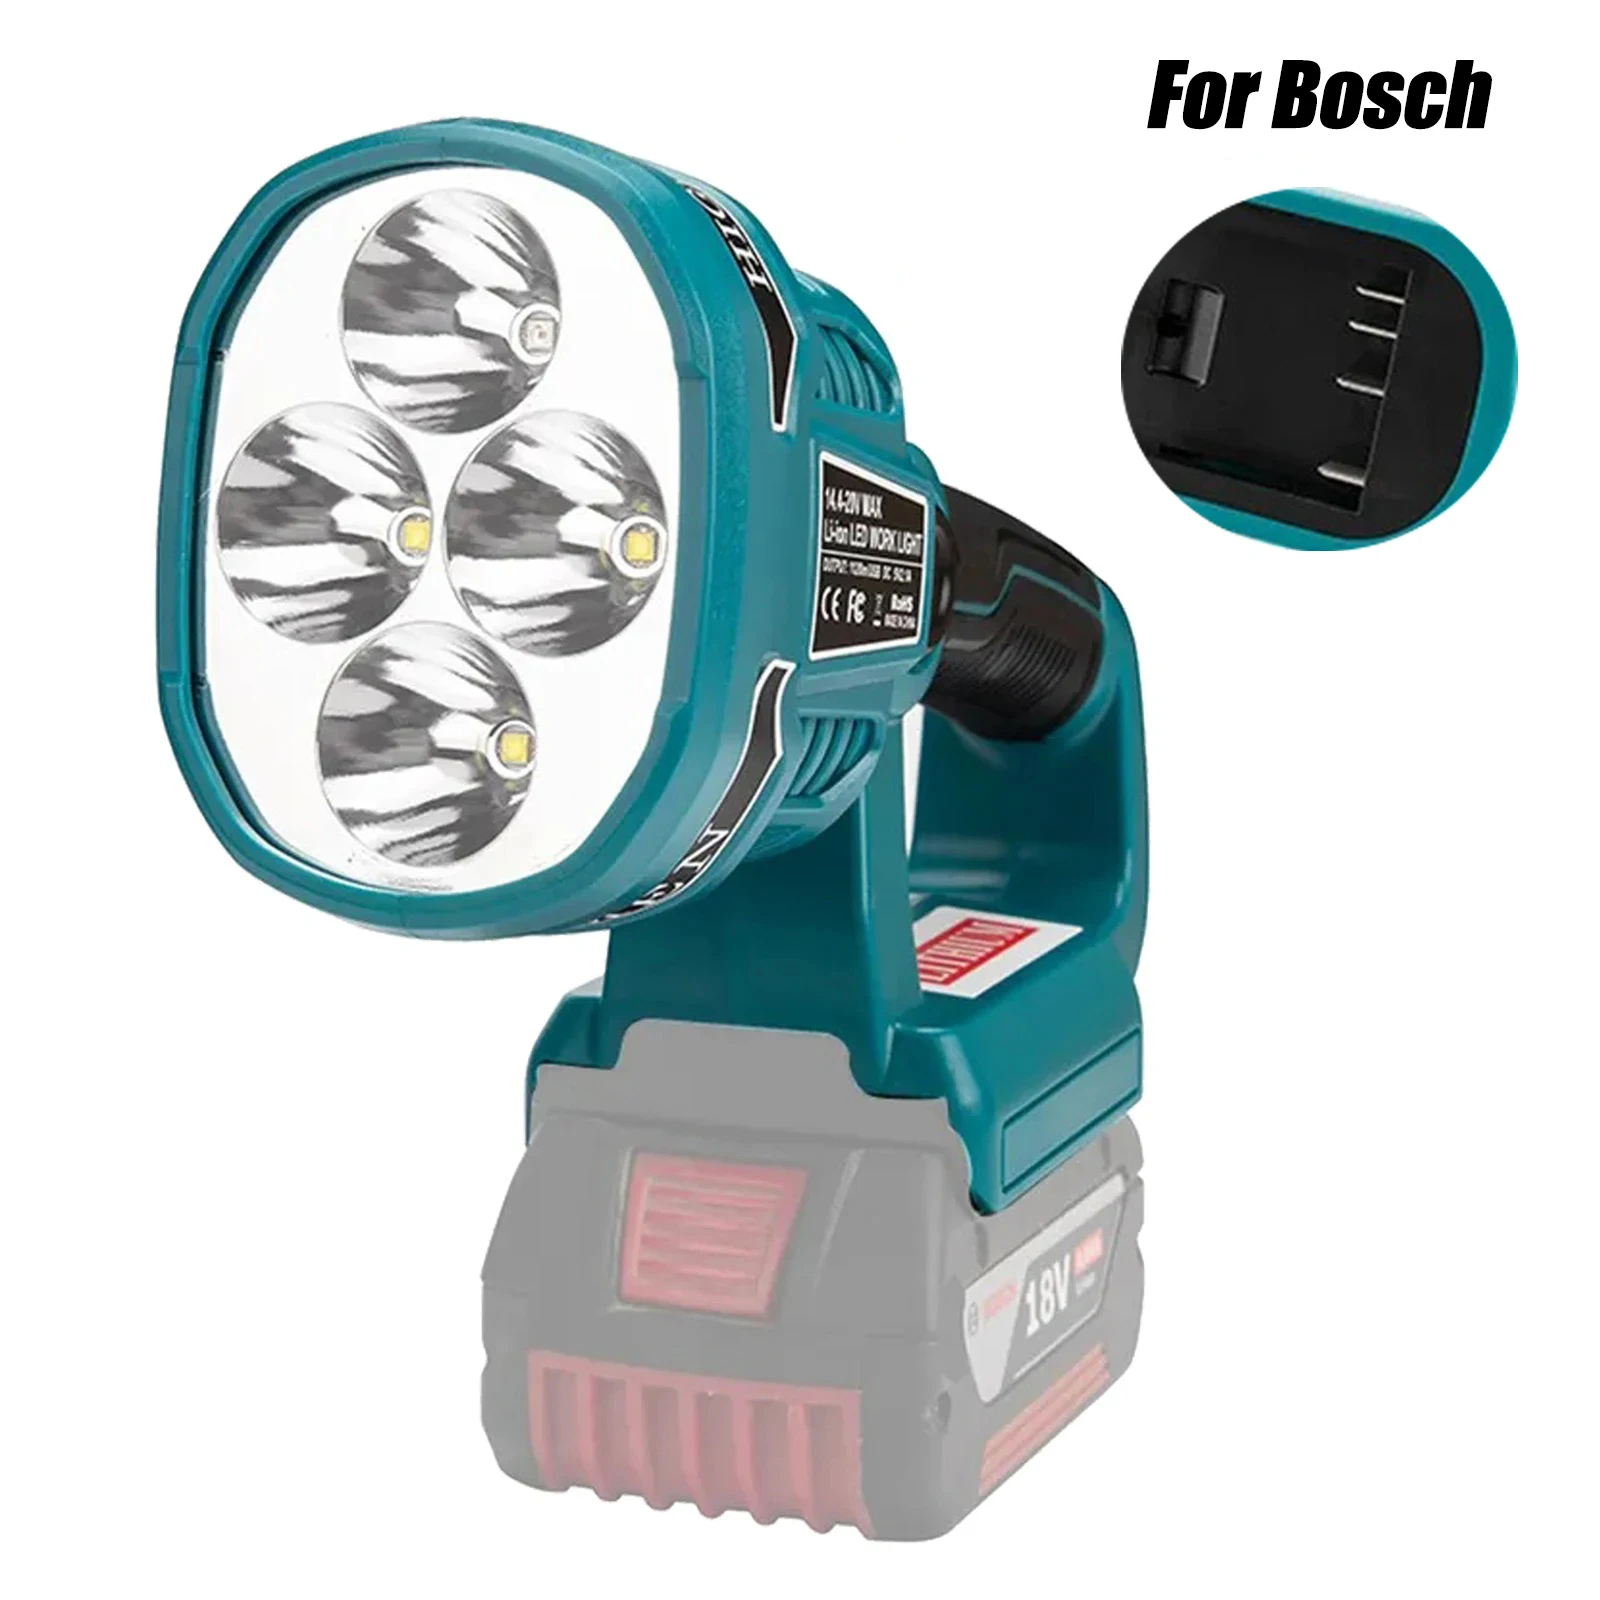 

9inch 12W 1120LM Emergency LED Work Light for Bosch 14.4V-20V Li-ion Battery Super Bright Portable Handheld Flashlight